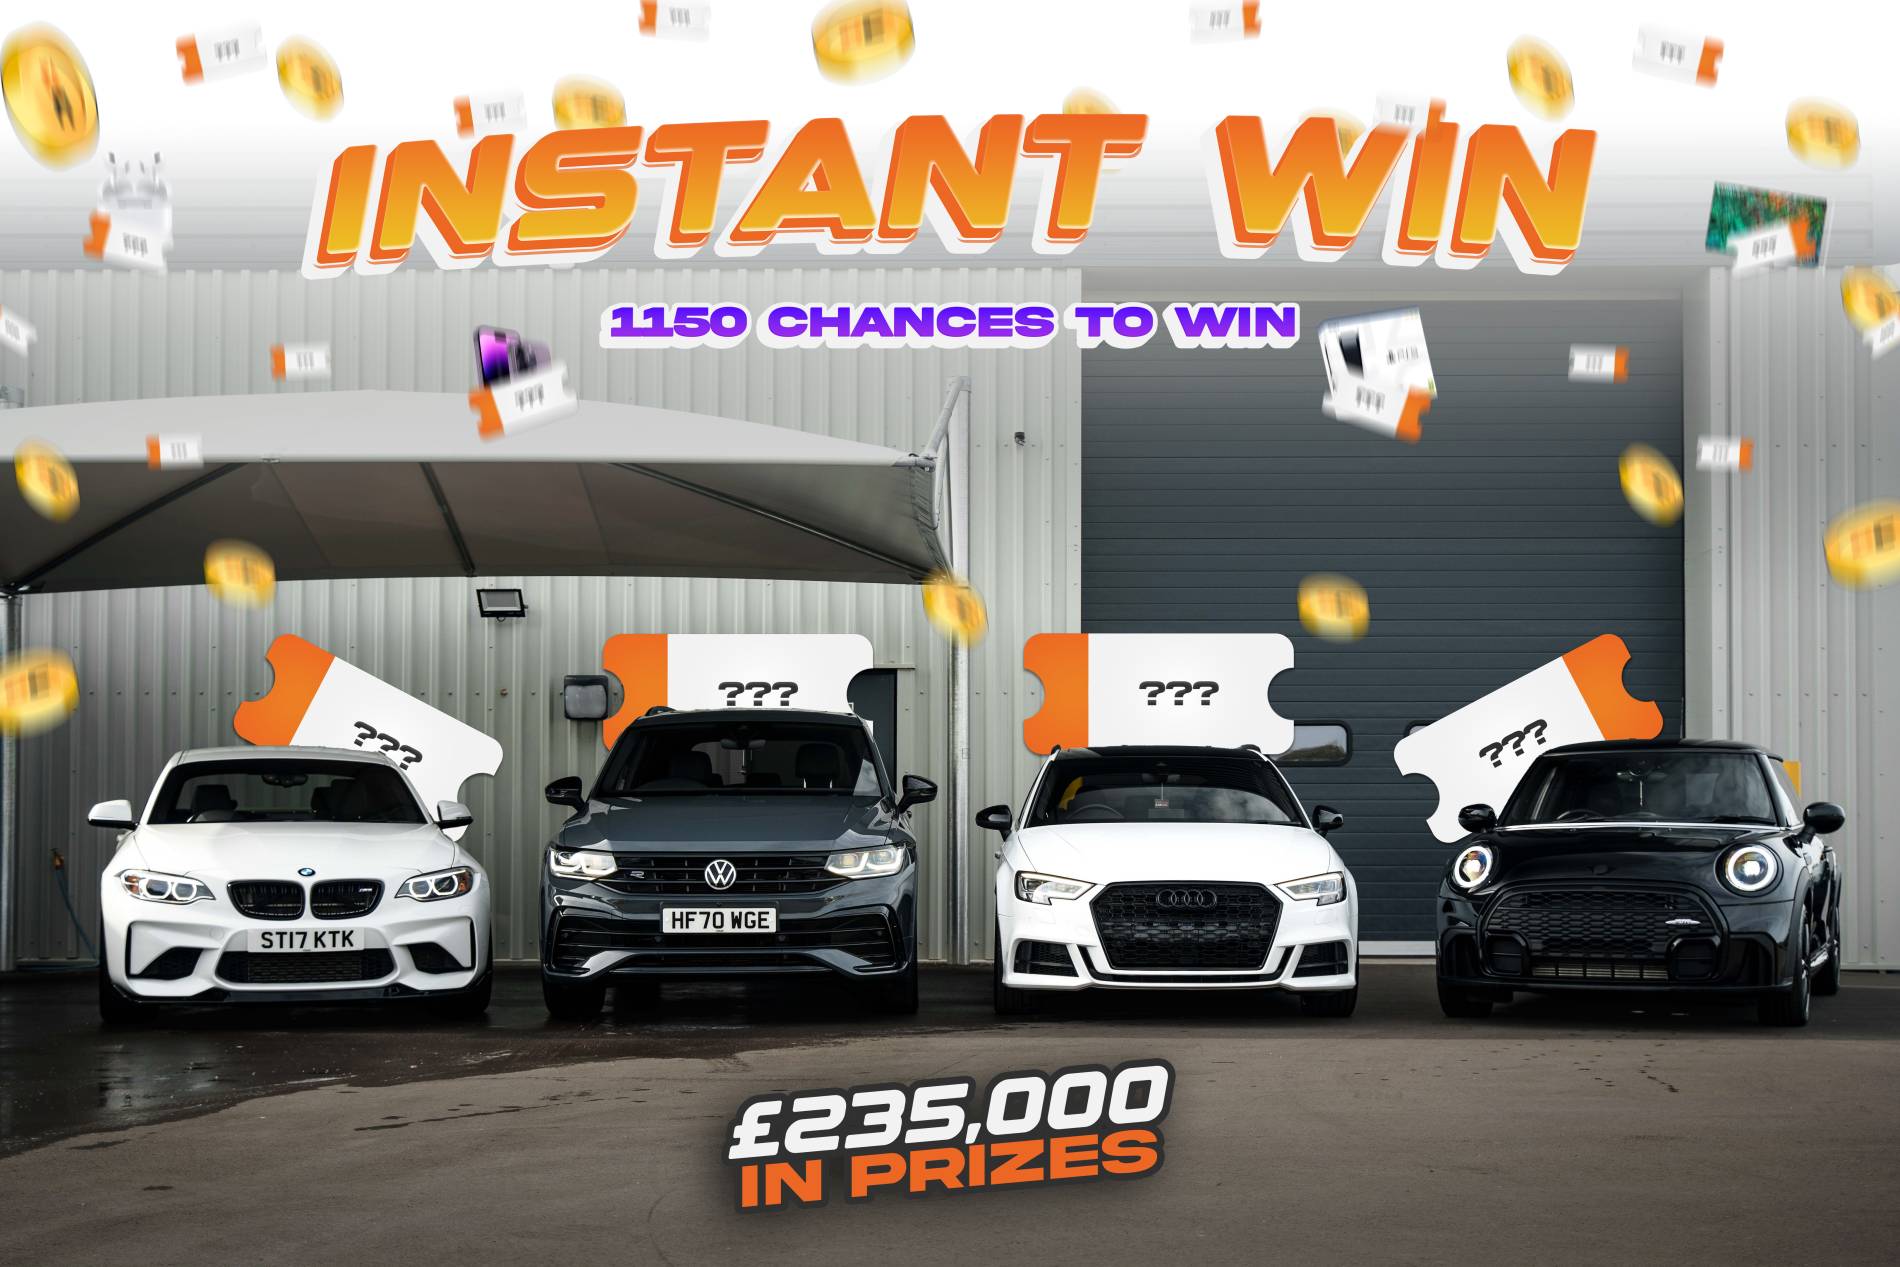 Win 1150 Instant Wins  / £235,000 Prize Pot - £10,000 End Prize!